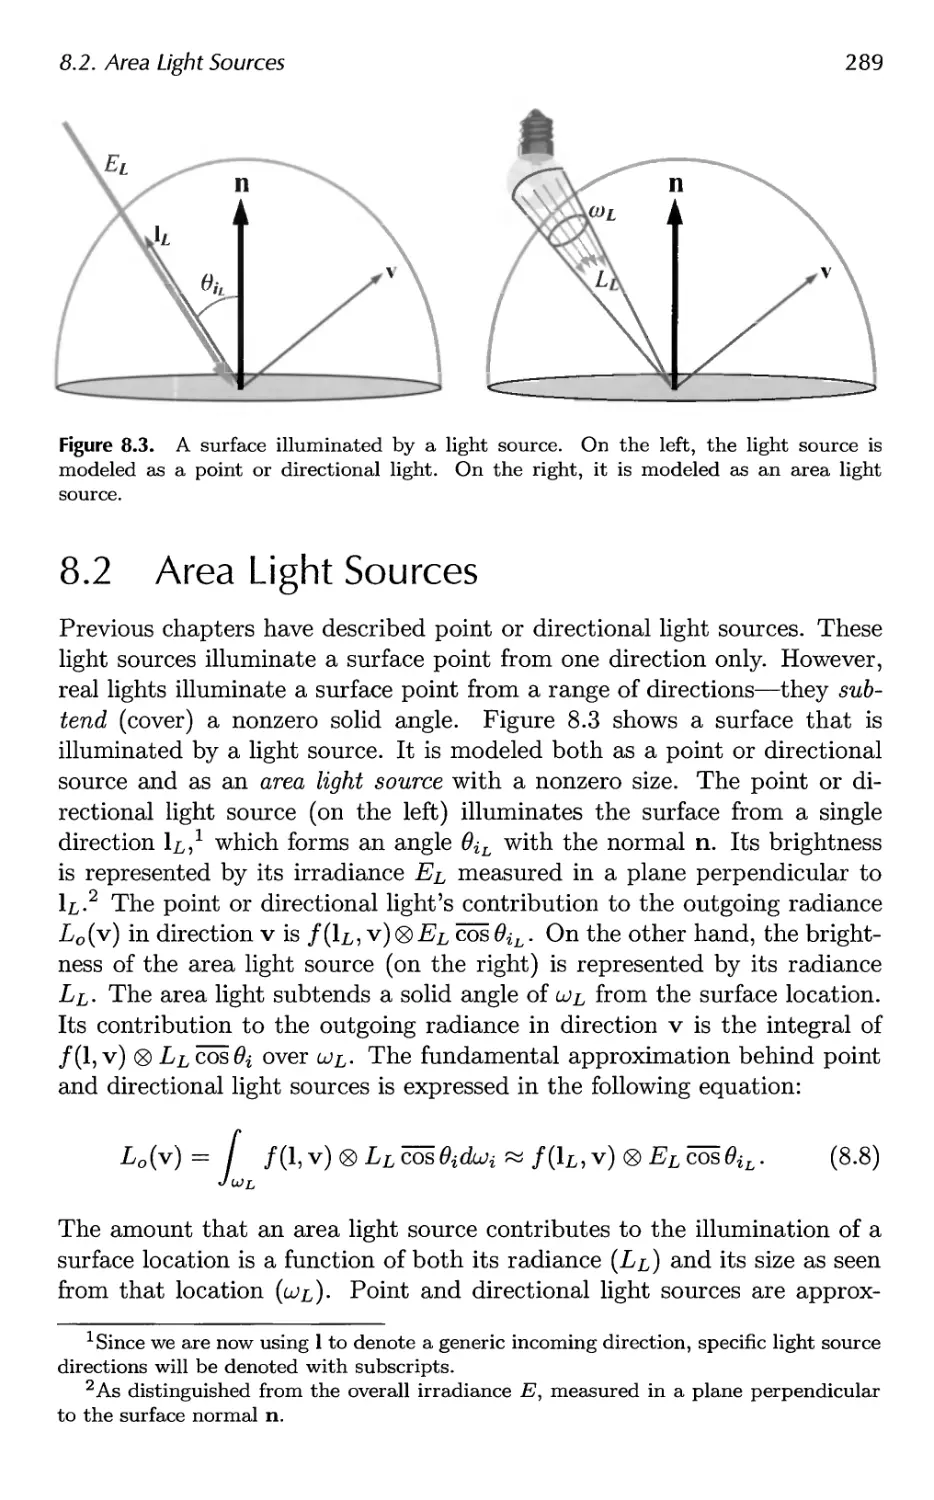 8.2 Area Light Sources